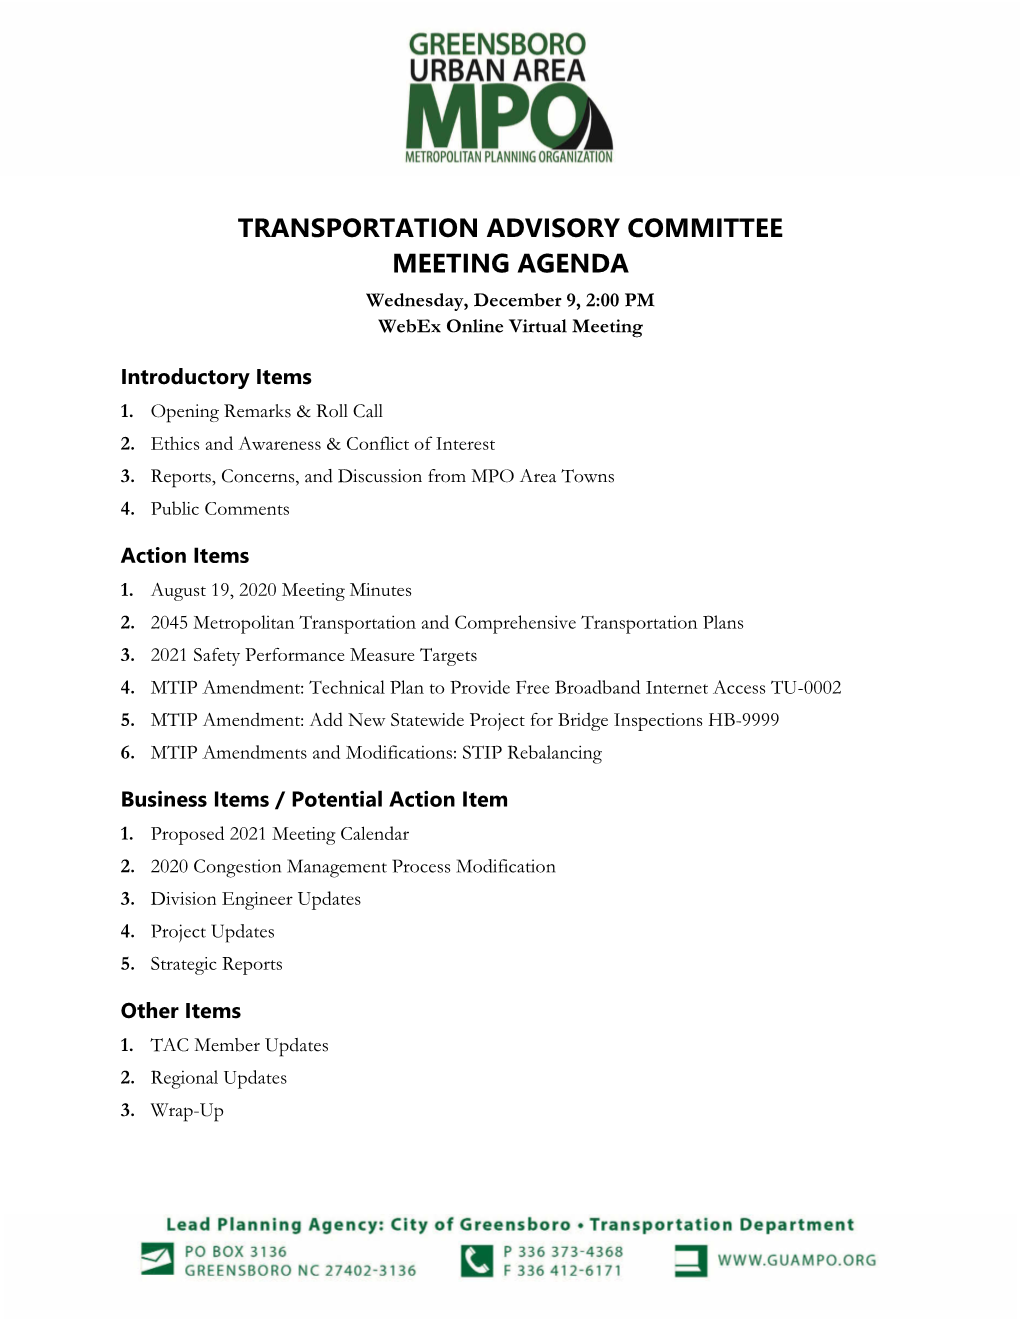 TRANSPORTATION ADVISORY COMMITTEE MEETING AGENDA Wednesday, December 9, 2:00 PM Webex Online Virtual Meeting